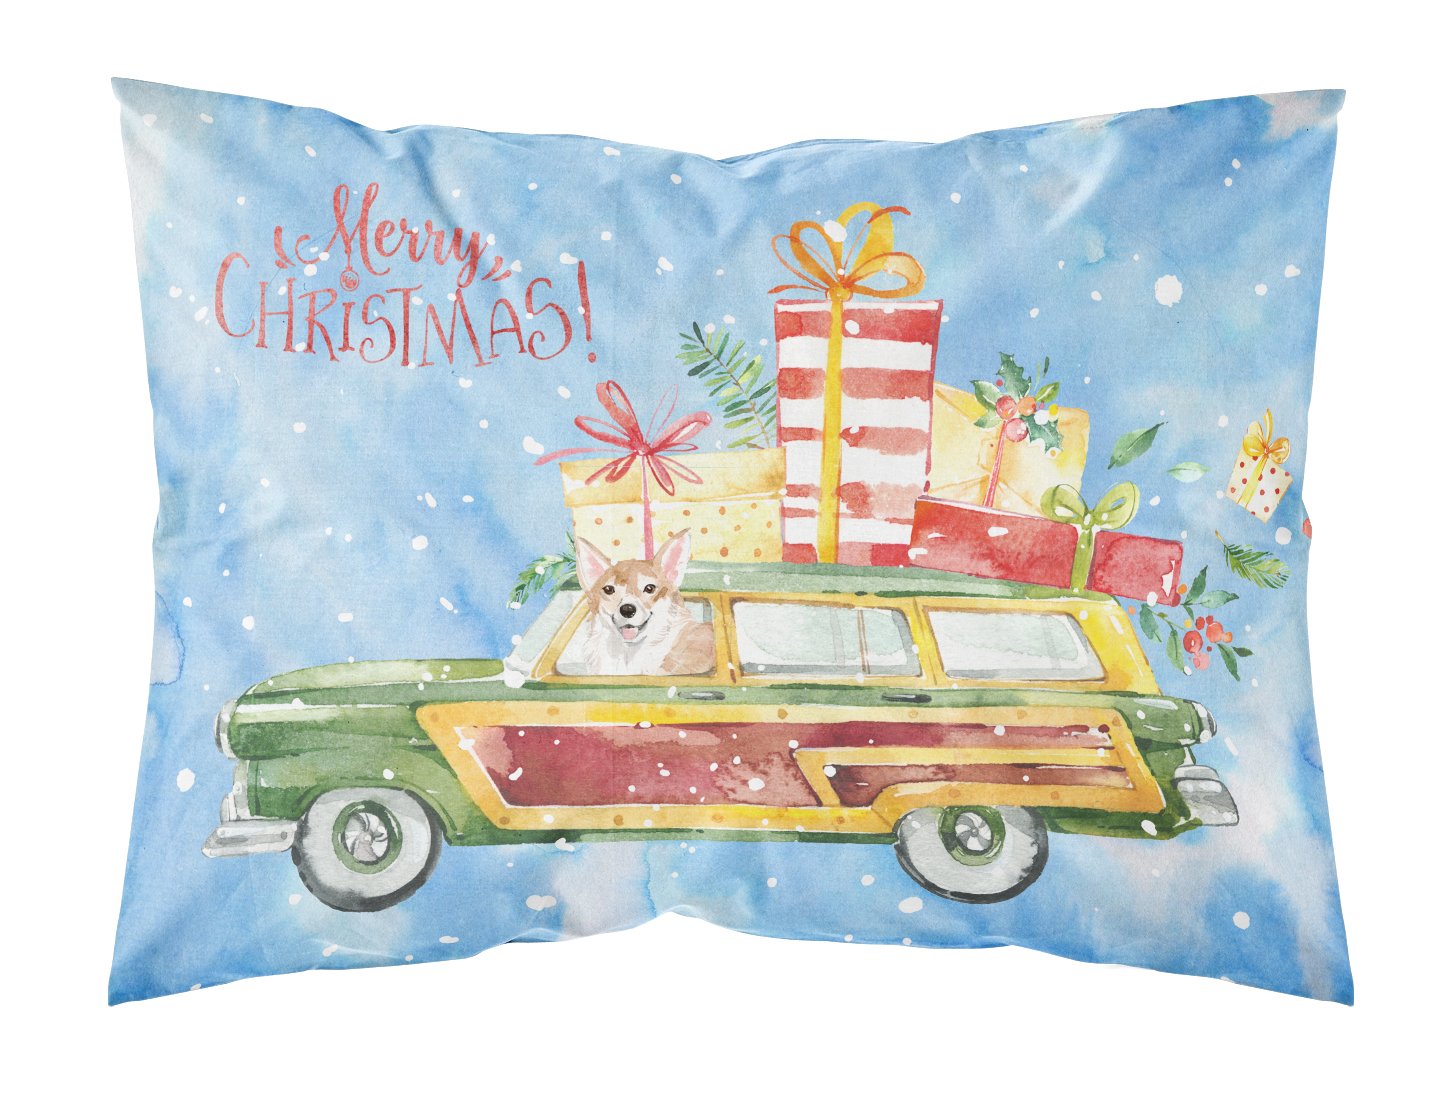 Merry Christmas Corgi Fabric Standard Pillowcase CK2451PILLOWCASE by Caroline's Treasures